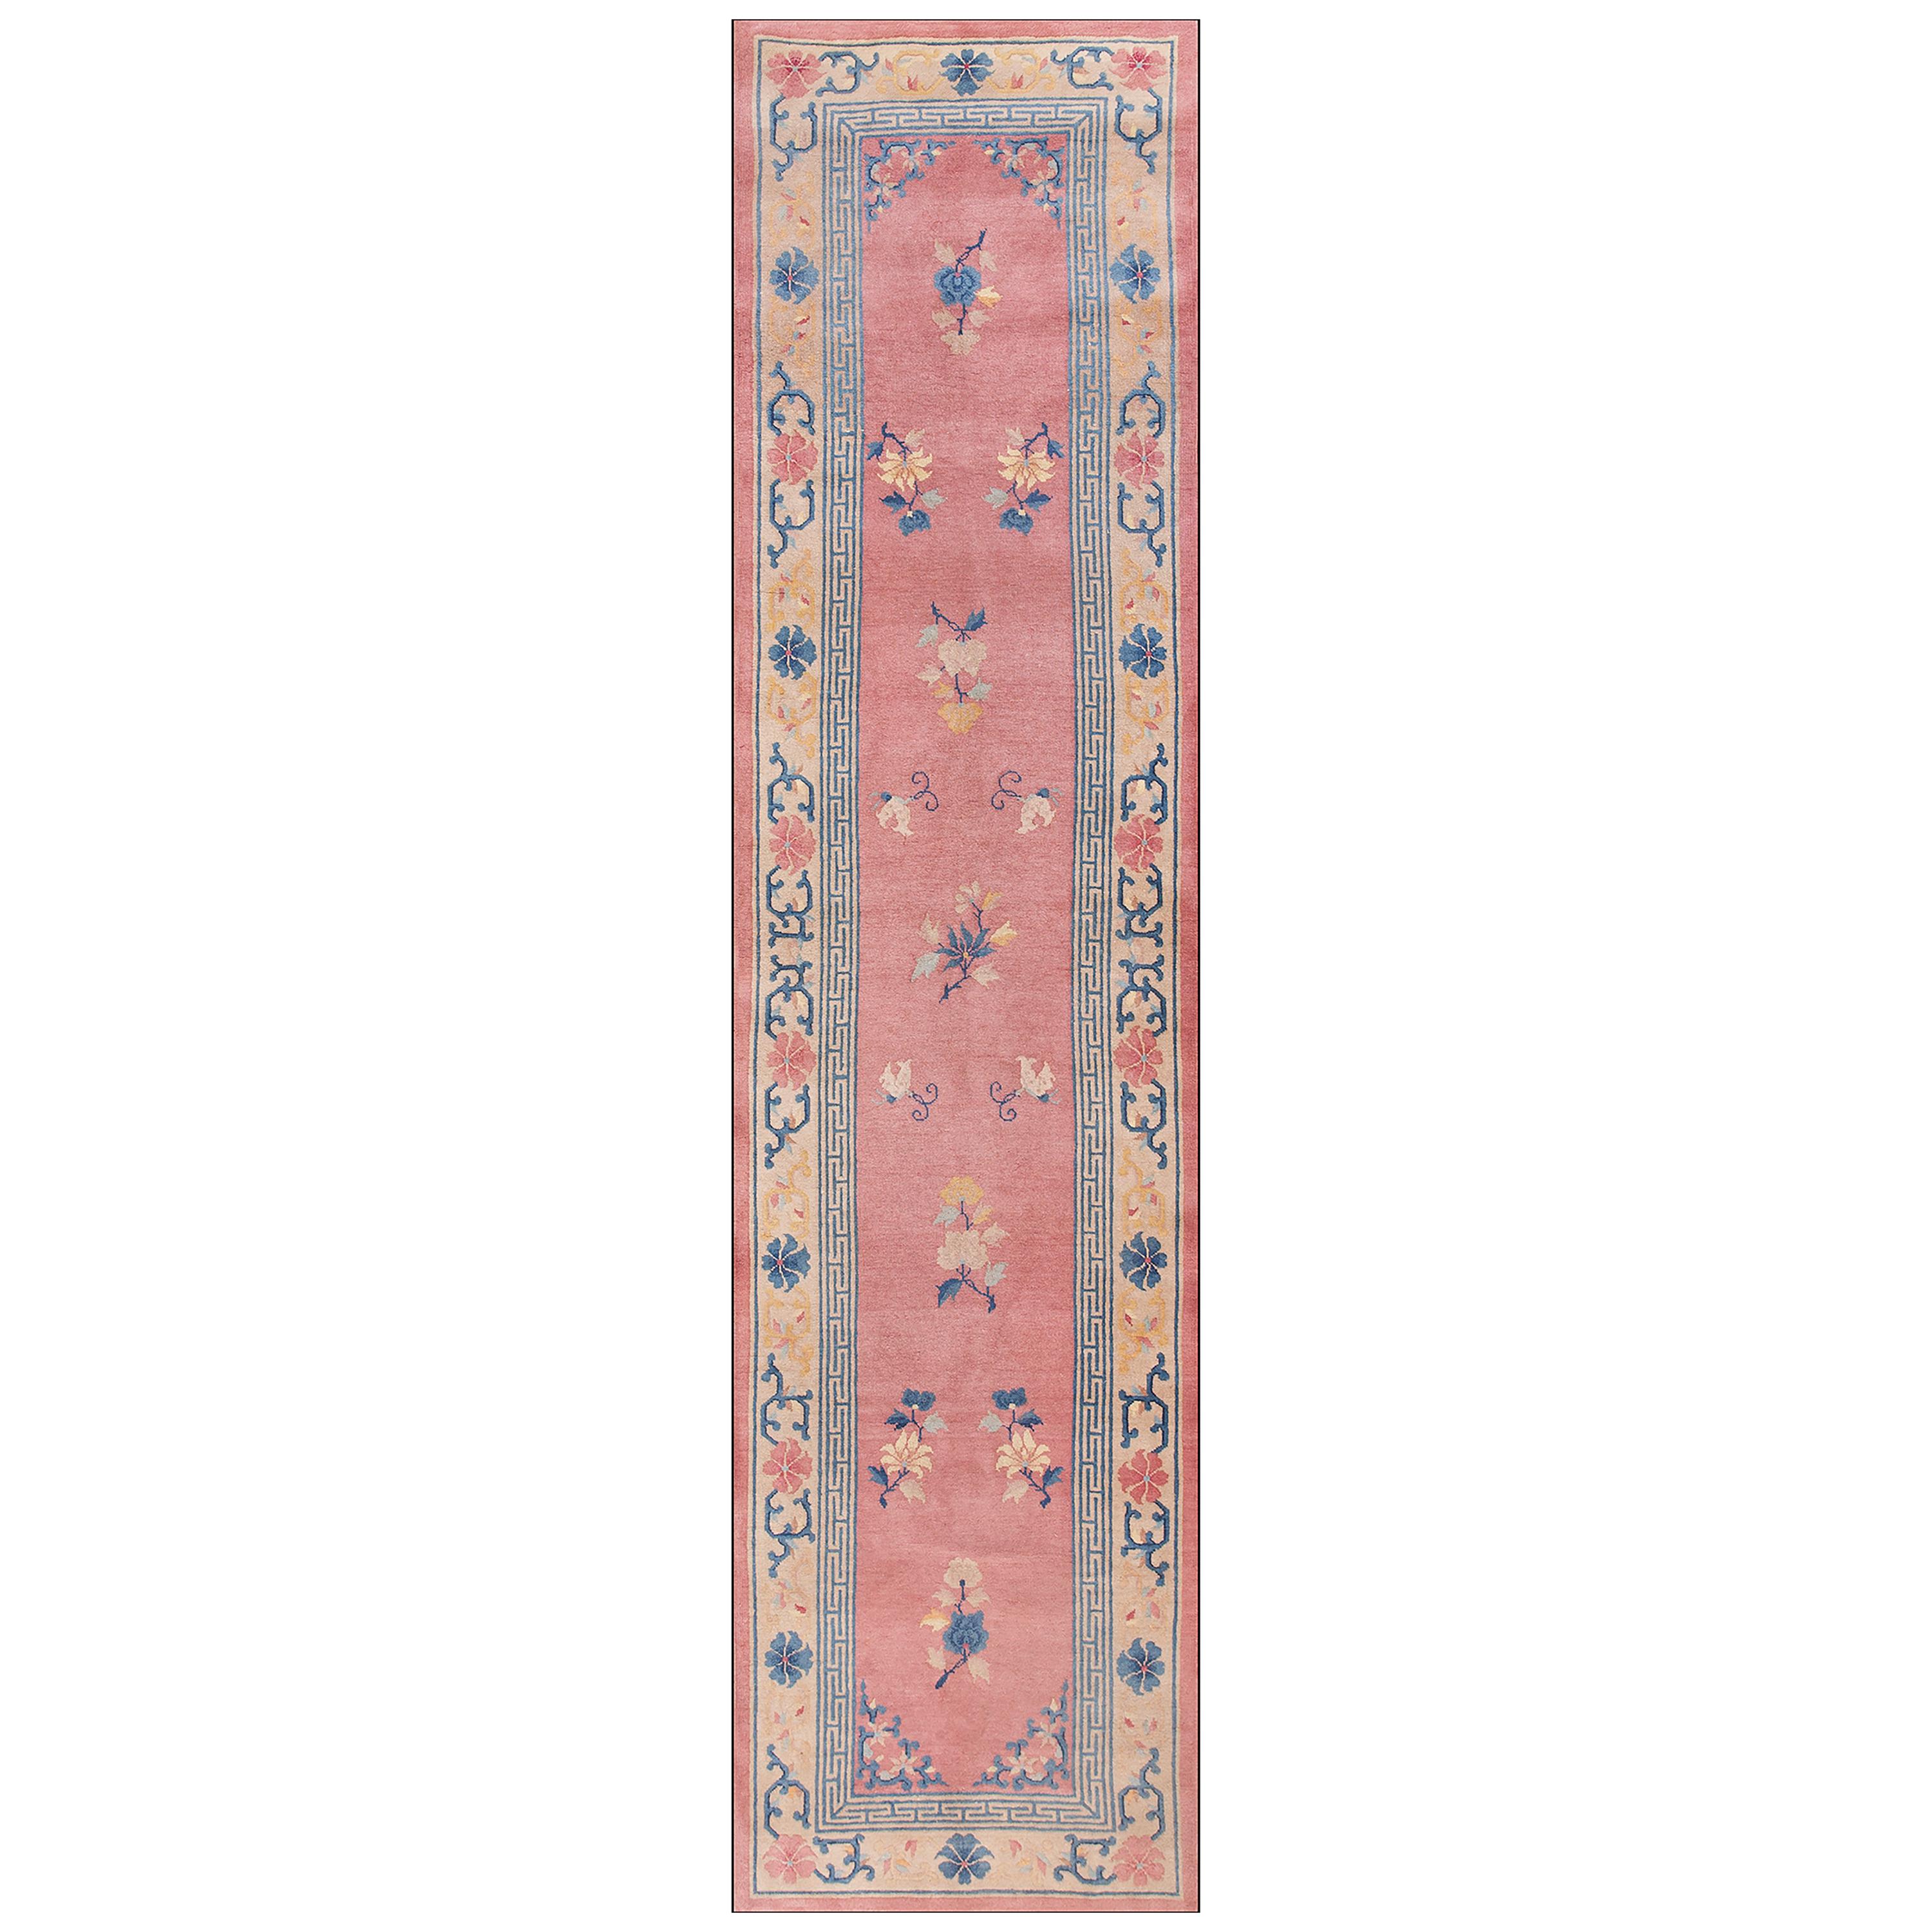 1930s Chinese Peking Carpet ( 3' x 11'8" - 92 x 355 )